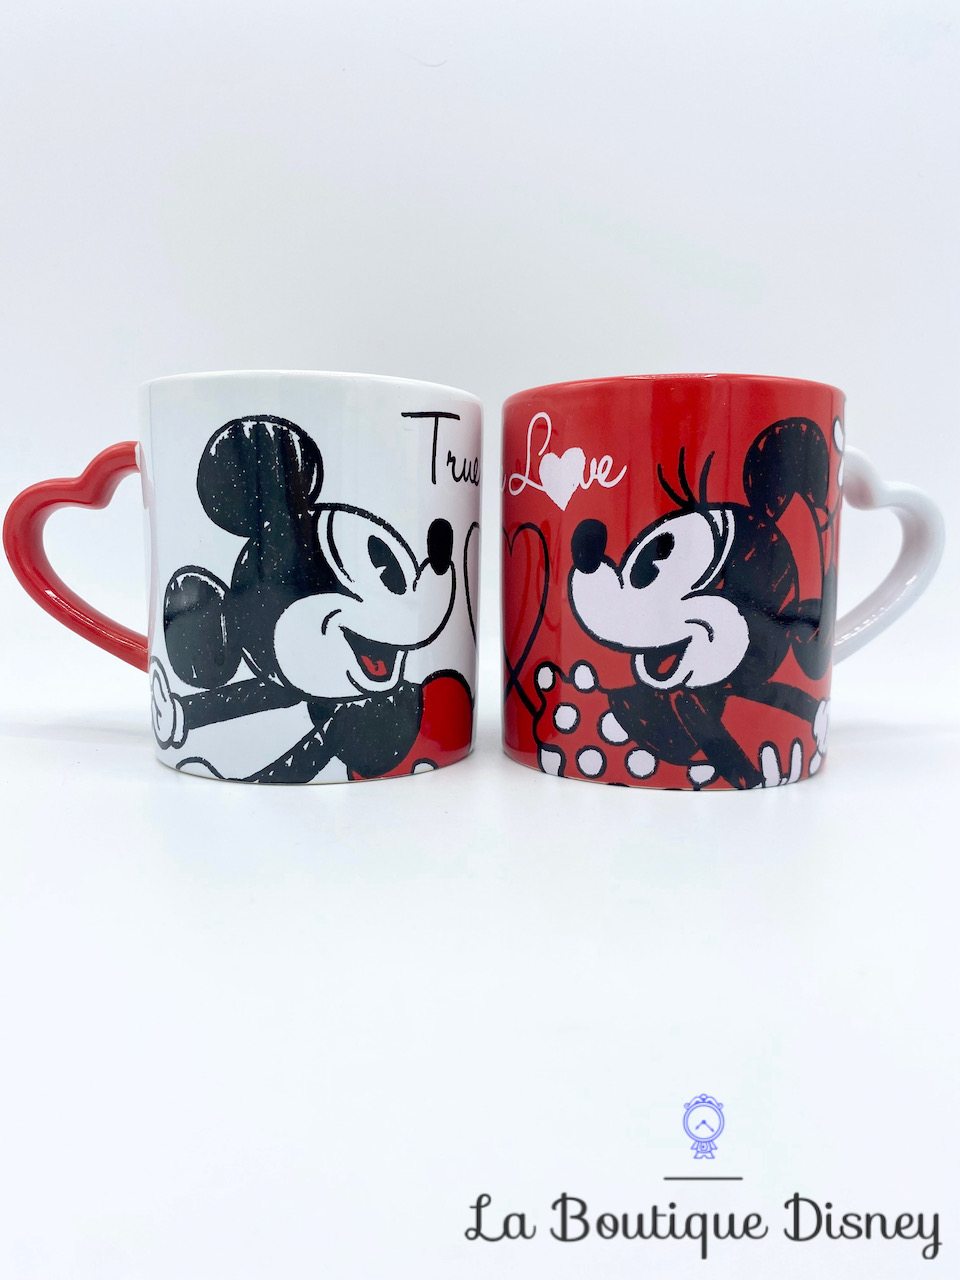 Paire Tasses Mickey Minnie Disneyland Paris 2020 mug Disney True Love Coeur rouge noir blanc duo